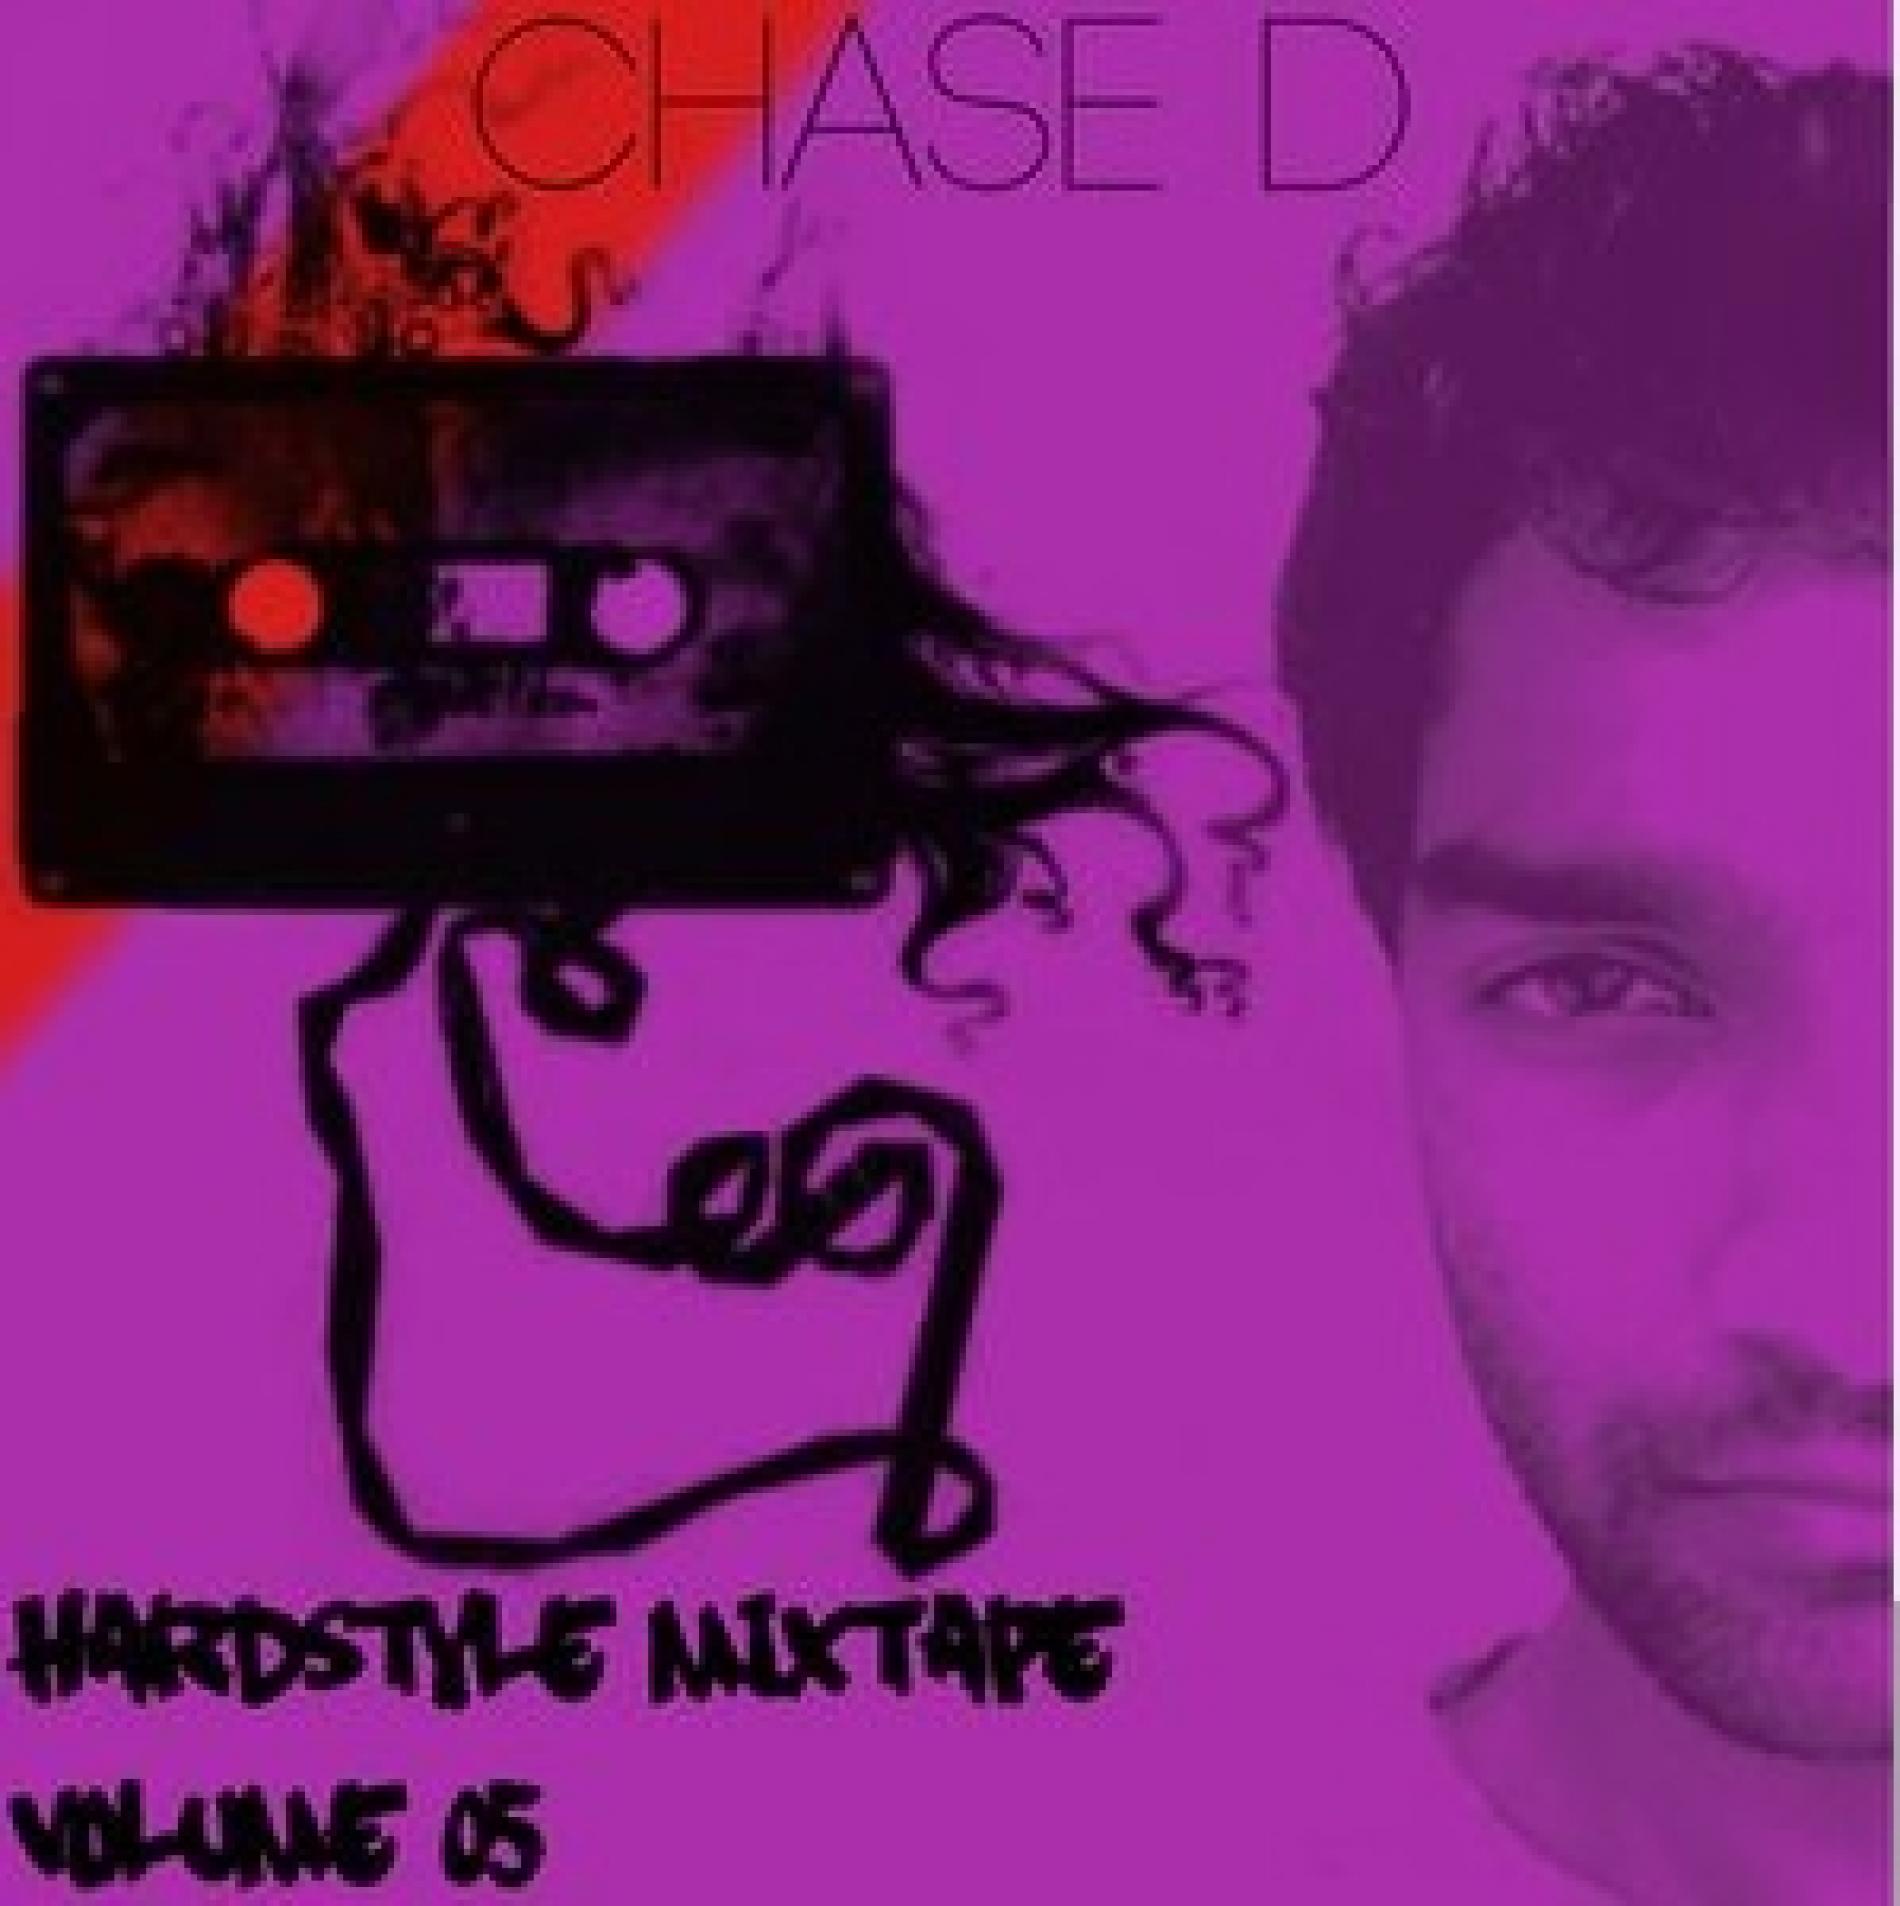 Chase D’s Hardstyle Mixtape Volume 05